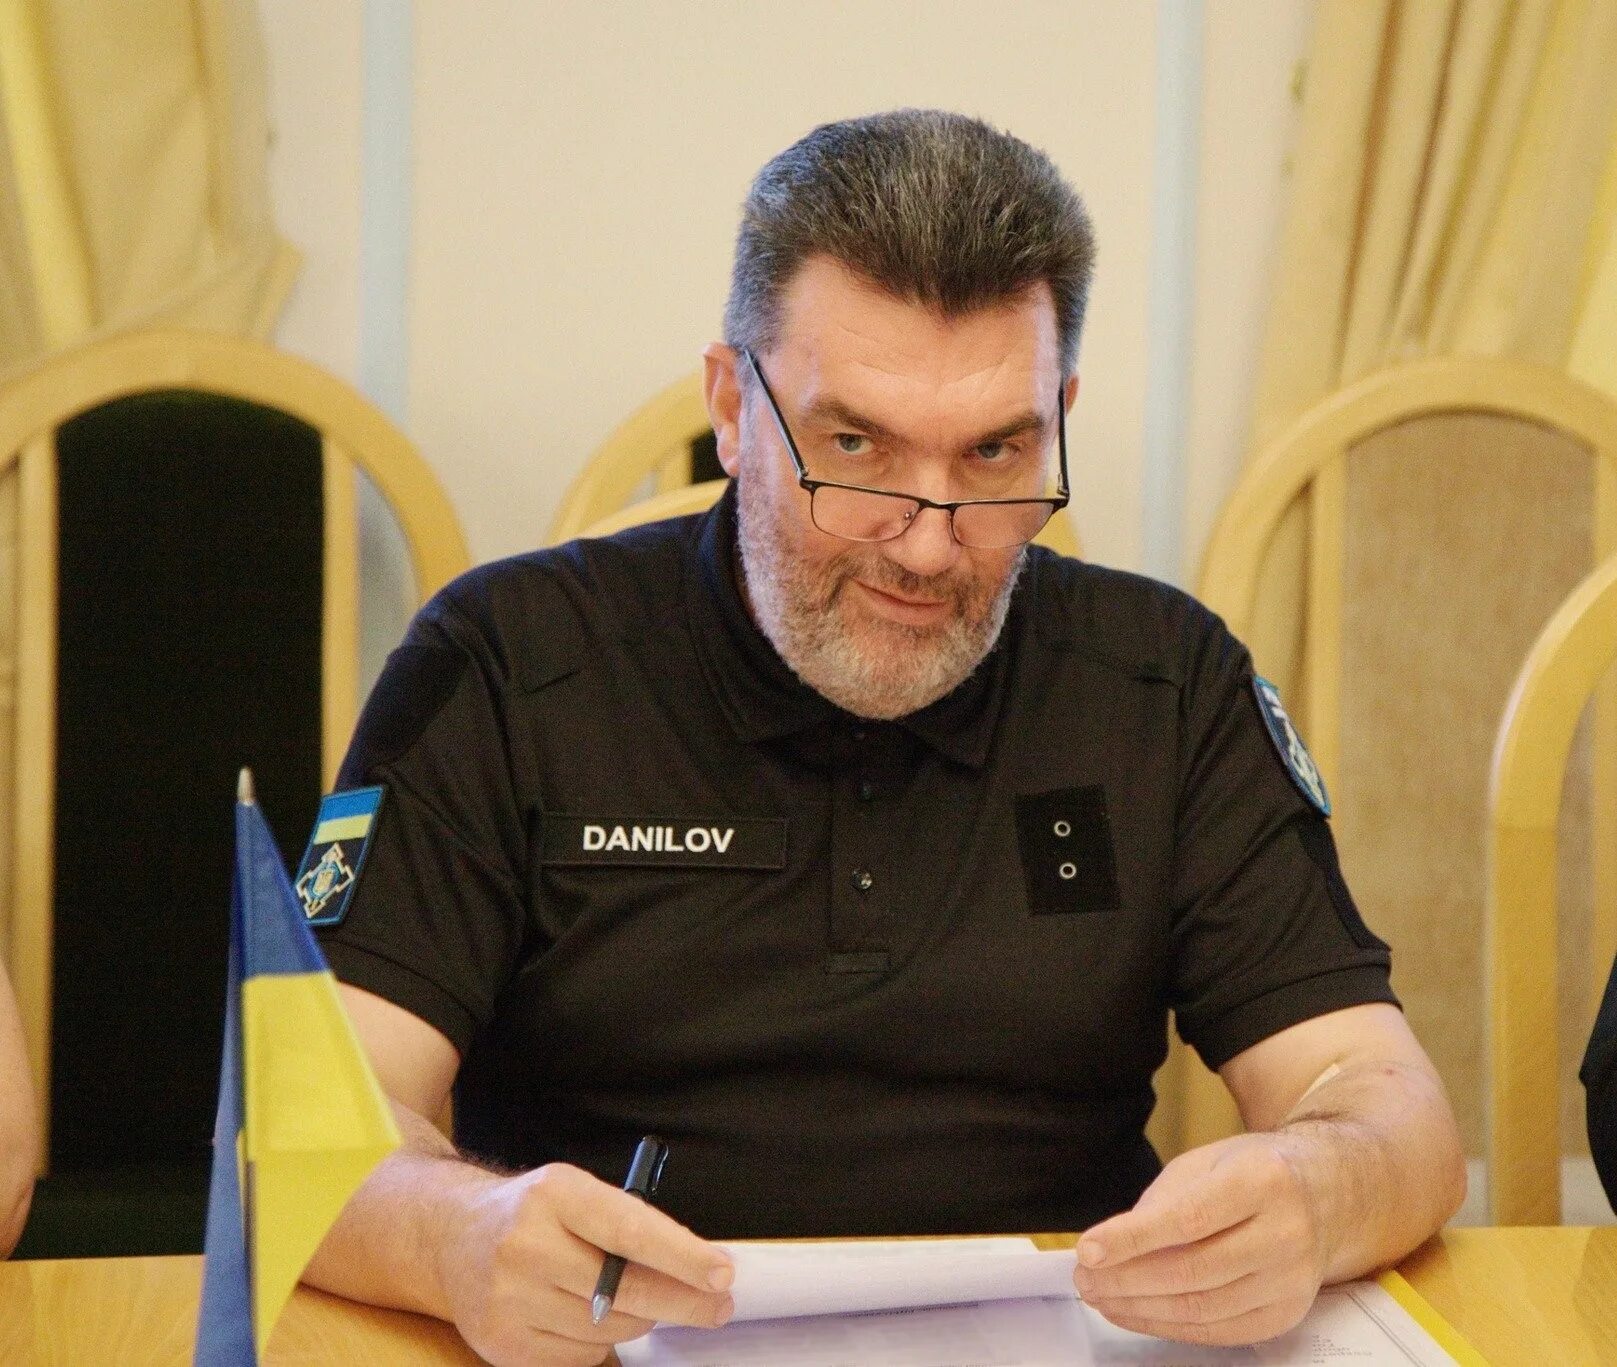 Фото данилова украина. Данилов Украина секретарь СНБО. Данилов глава СНБО.